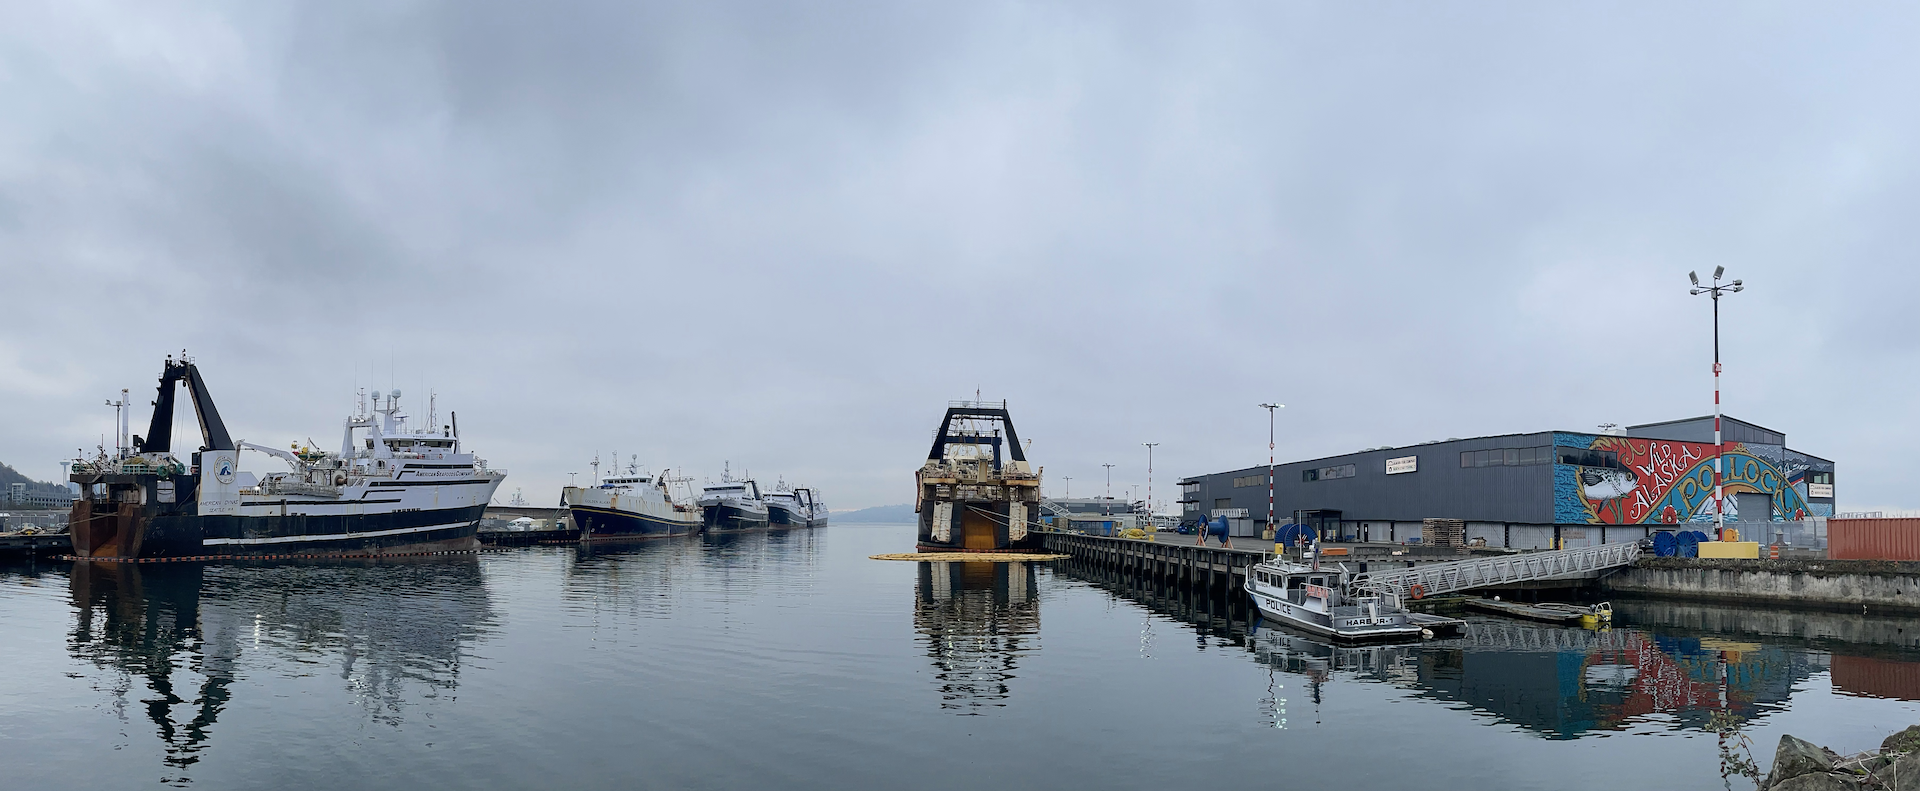 Identifying Alaska Commercial Fishing Boats - Information About Alaska